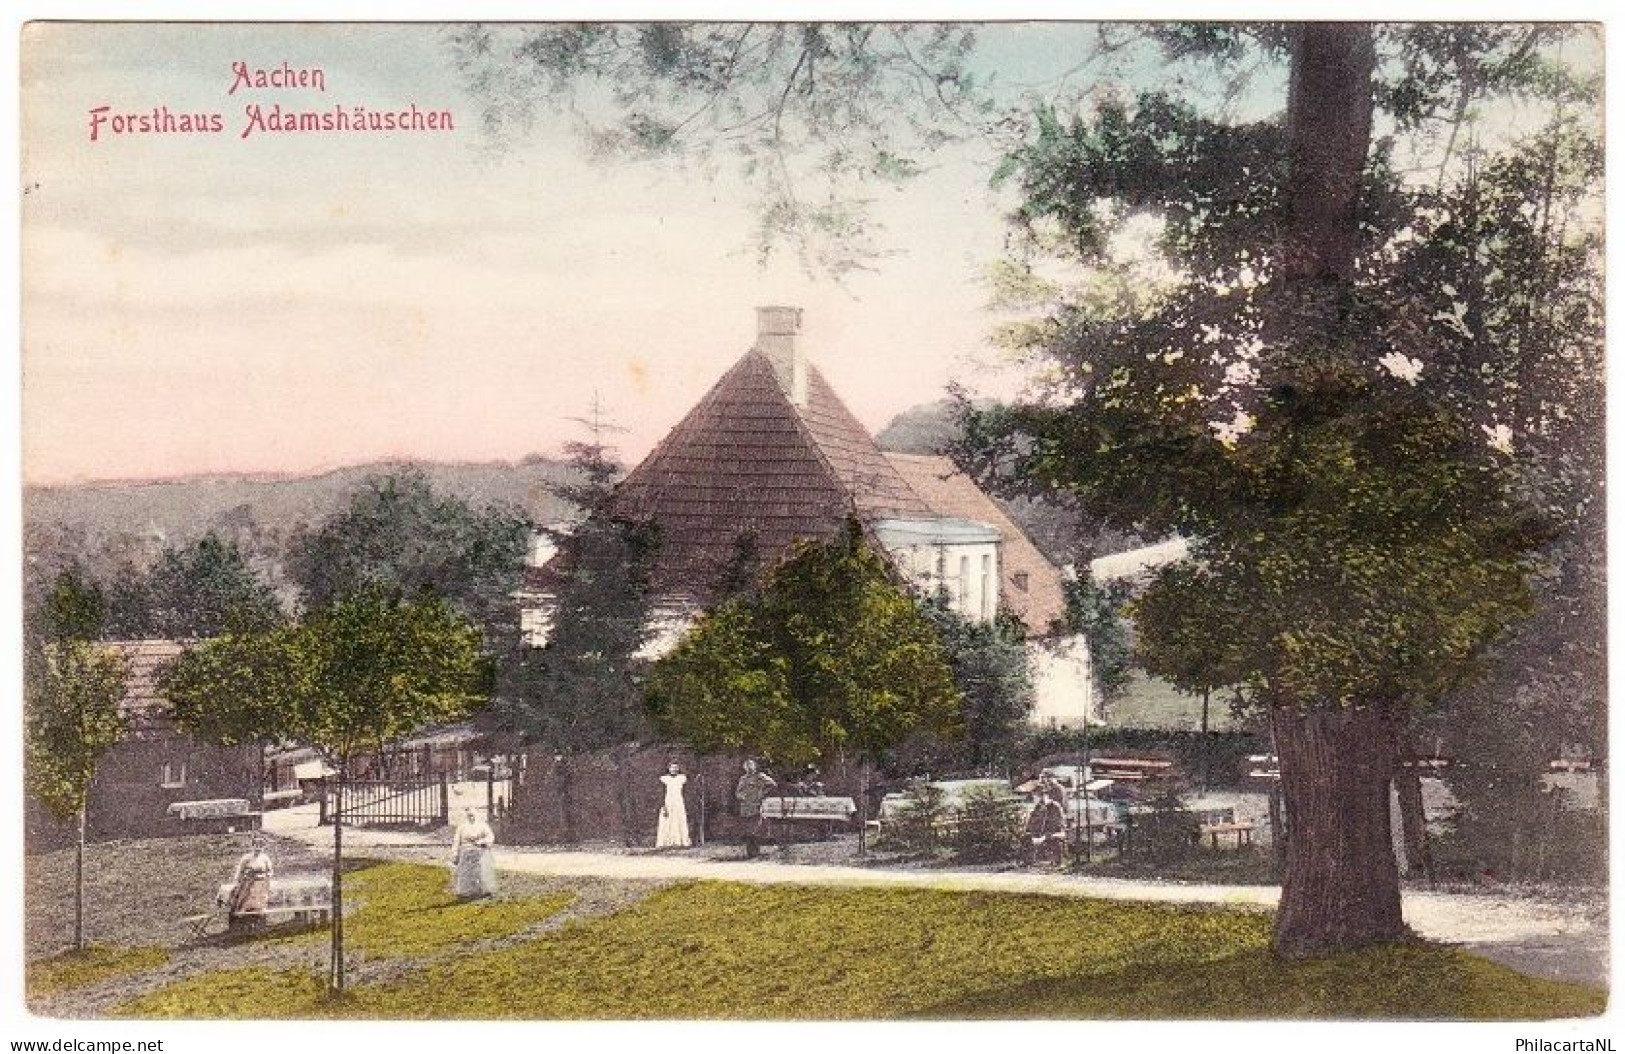 Aachen - Forsthaus Adamshauschen - 1907 - Achern